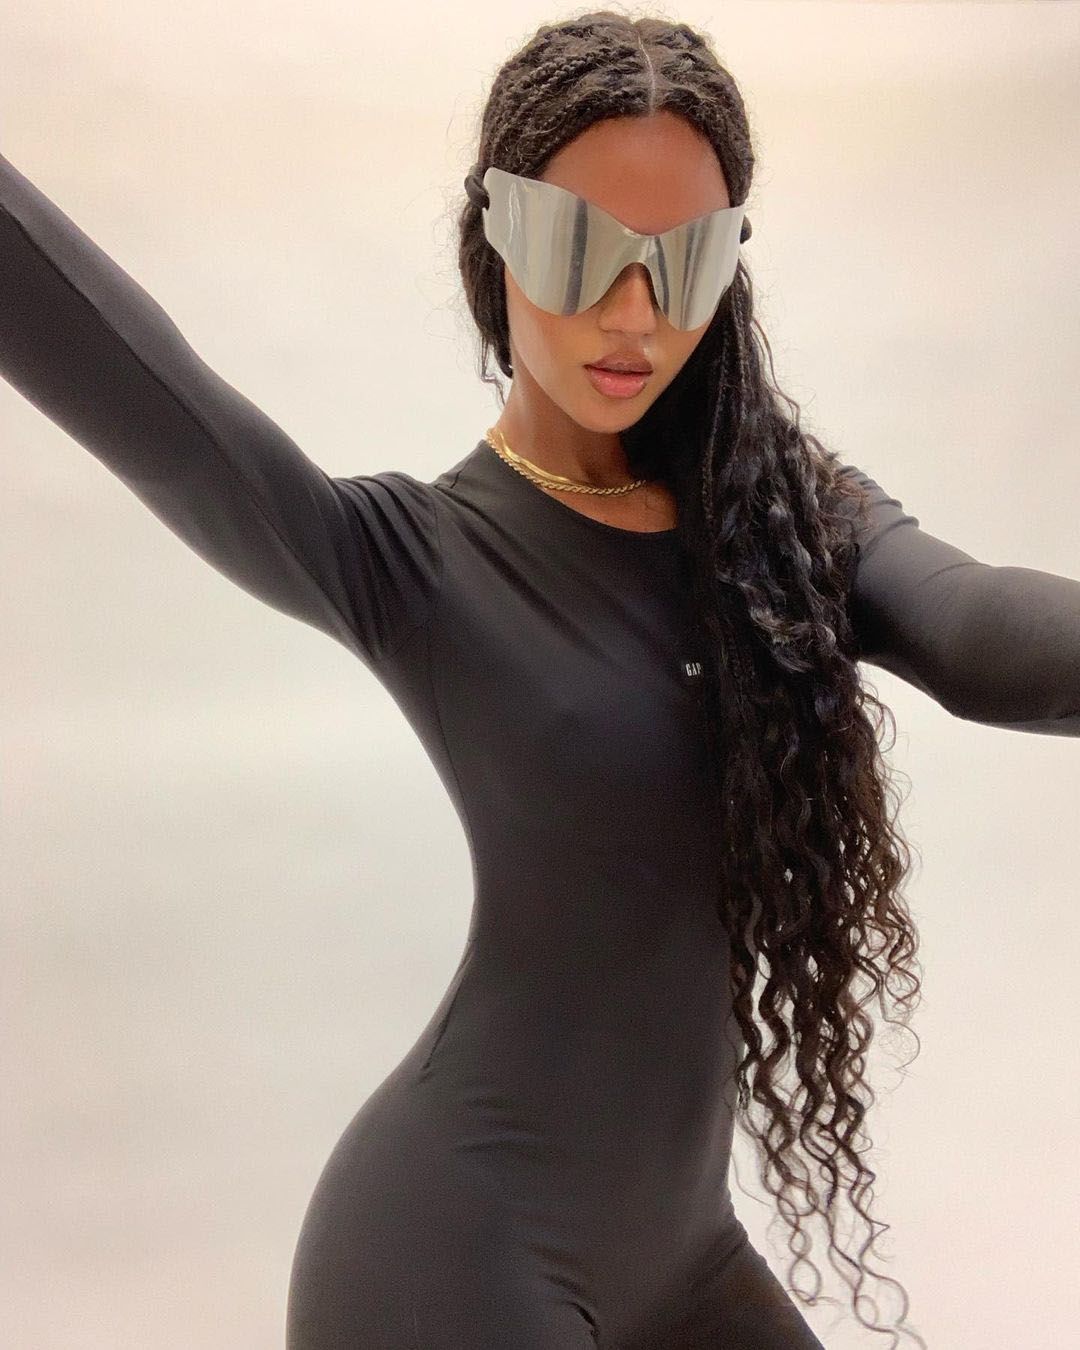 Juliana nalu yeezy shades model kanye west twitter instagram triangle of sadness